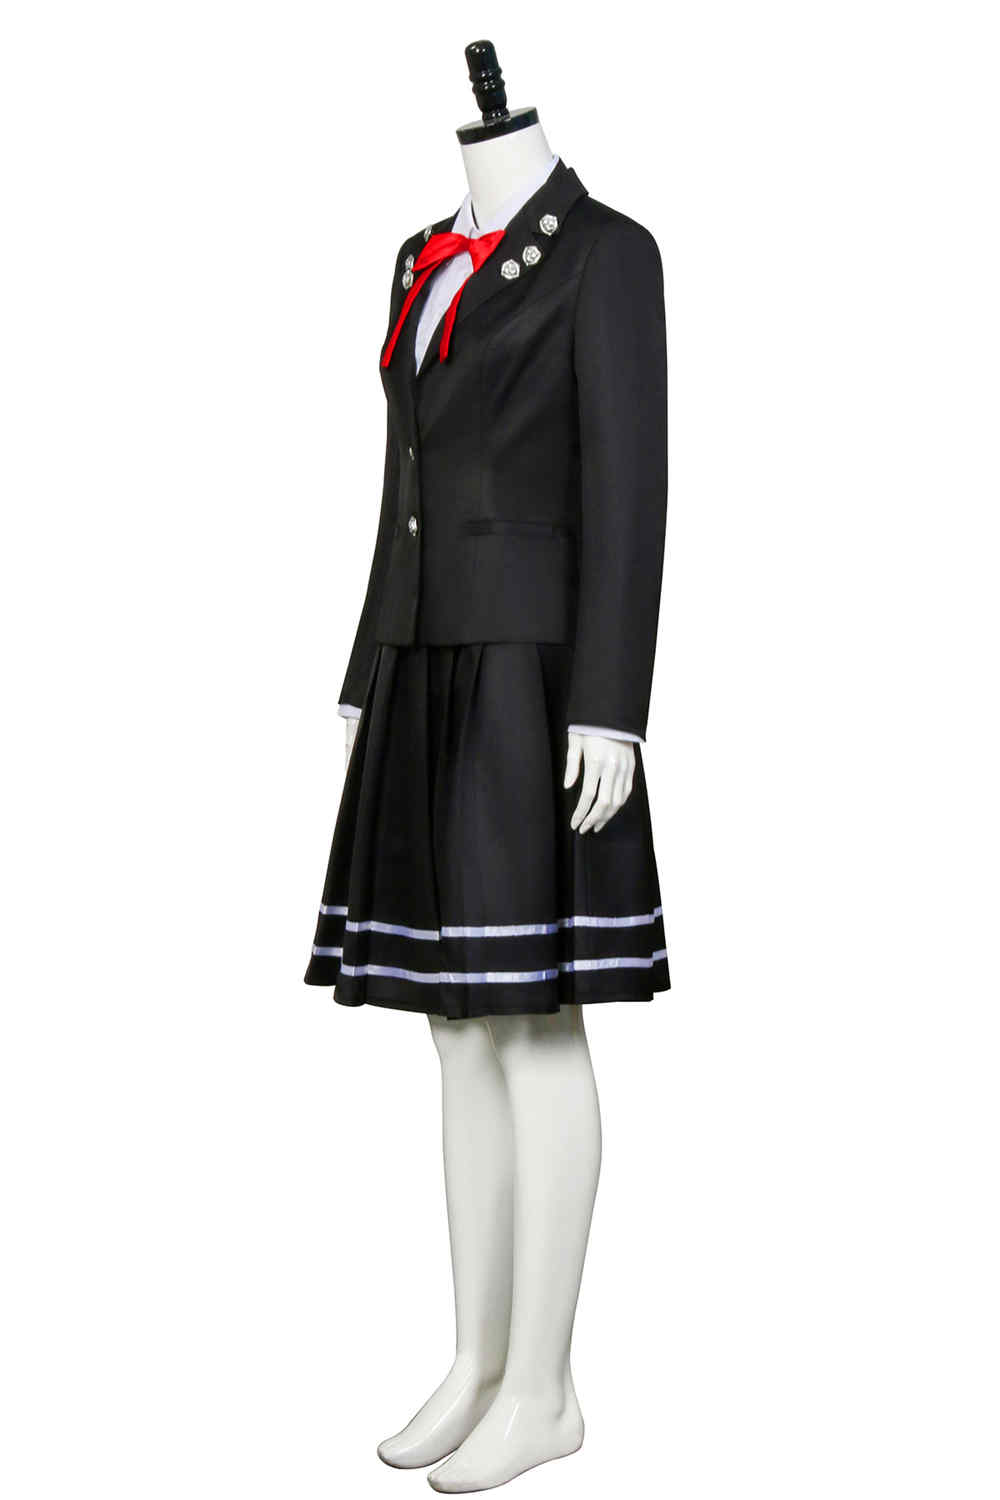 anime dangabronpa v3 shirogane tsumugi escolar uniforme de la escuela traje de vestuario de carnaval de halloween cosplay